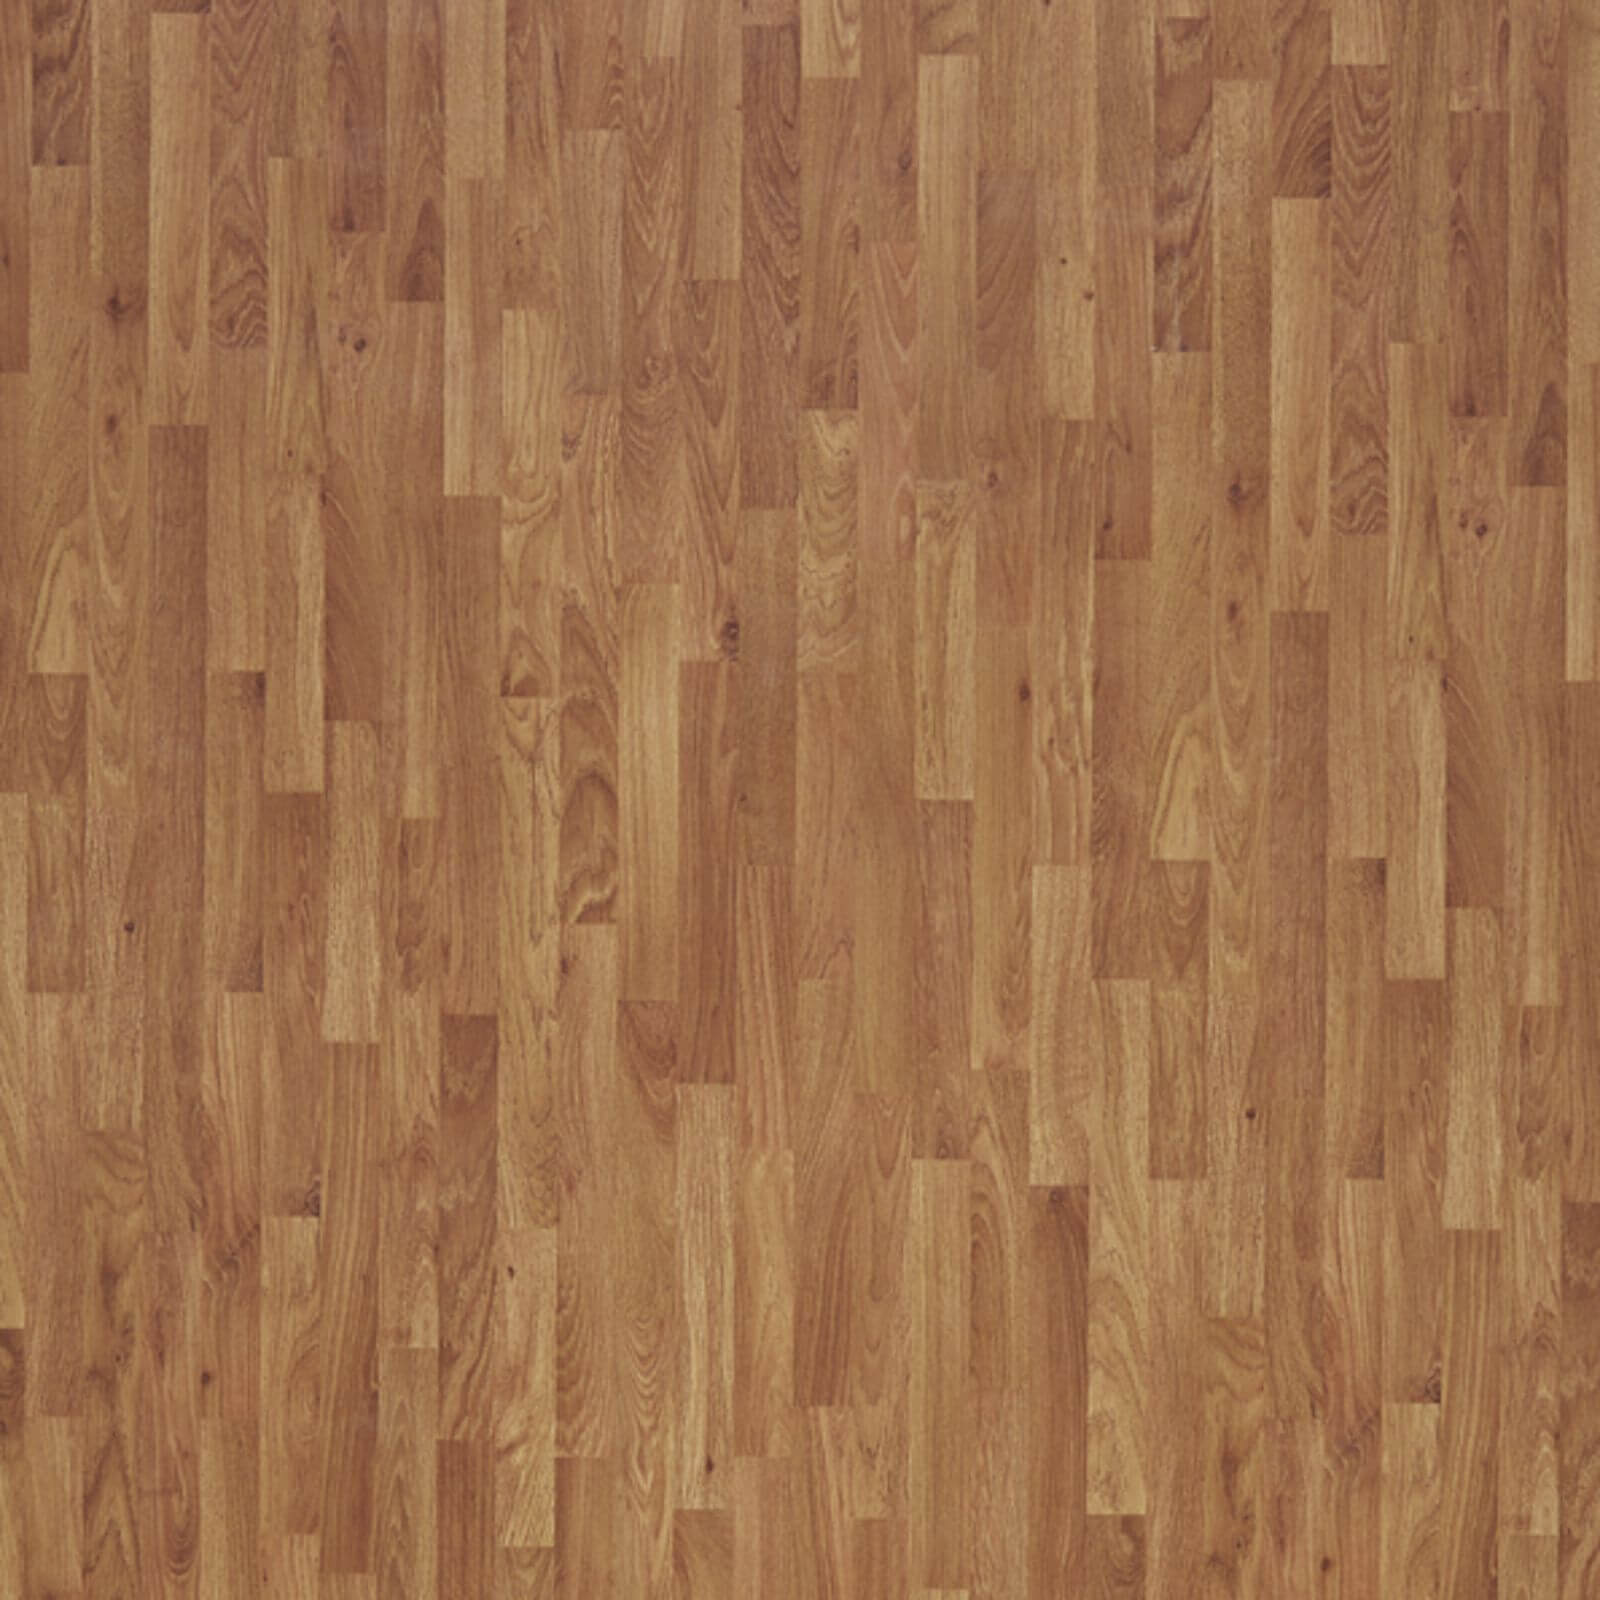 Golden Oak Kitchen Worktop Edging - 300cm